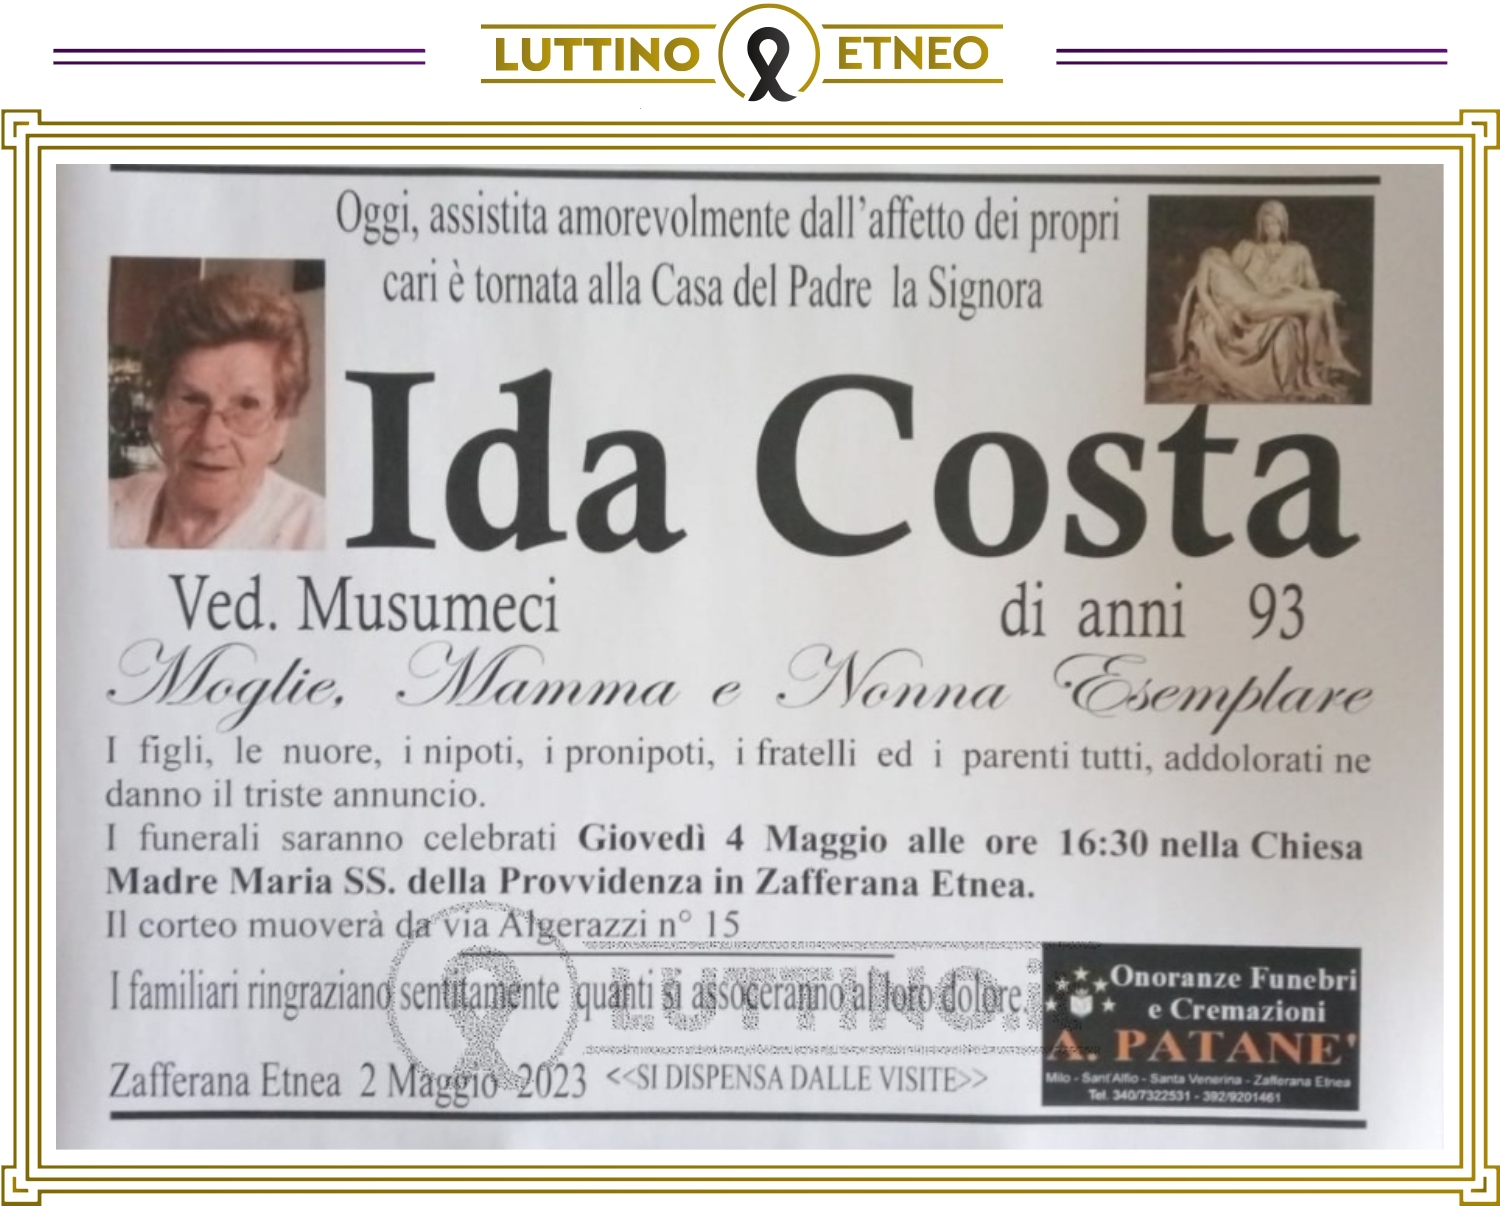 Ida Costa